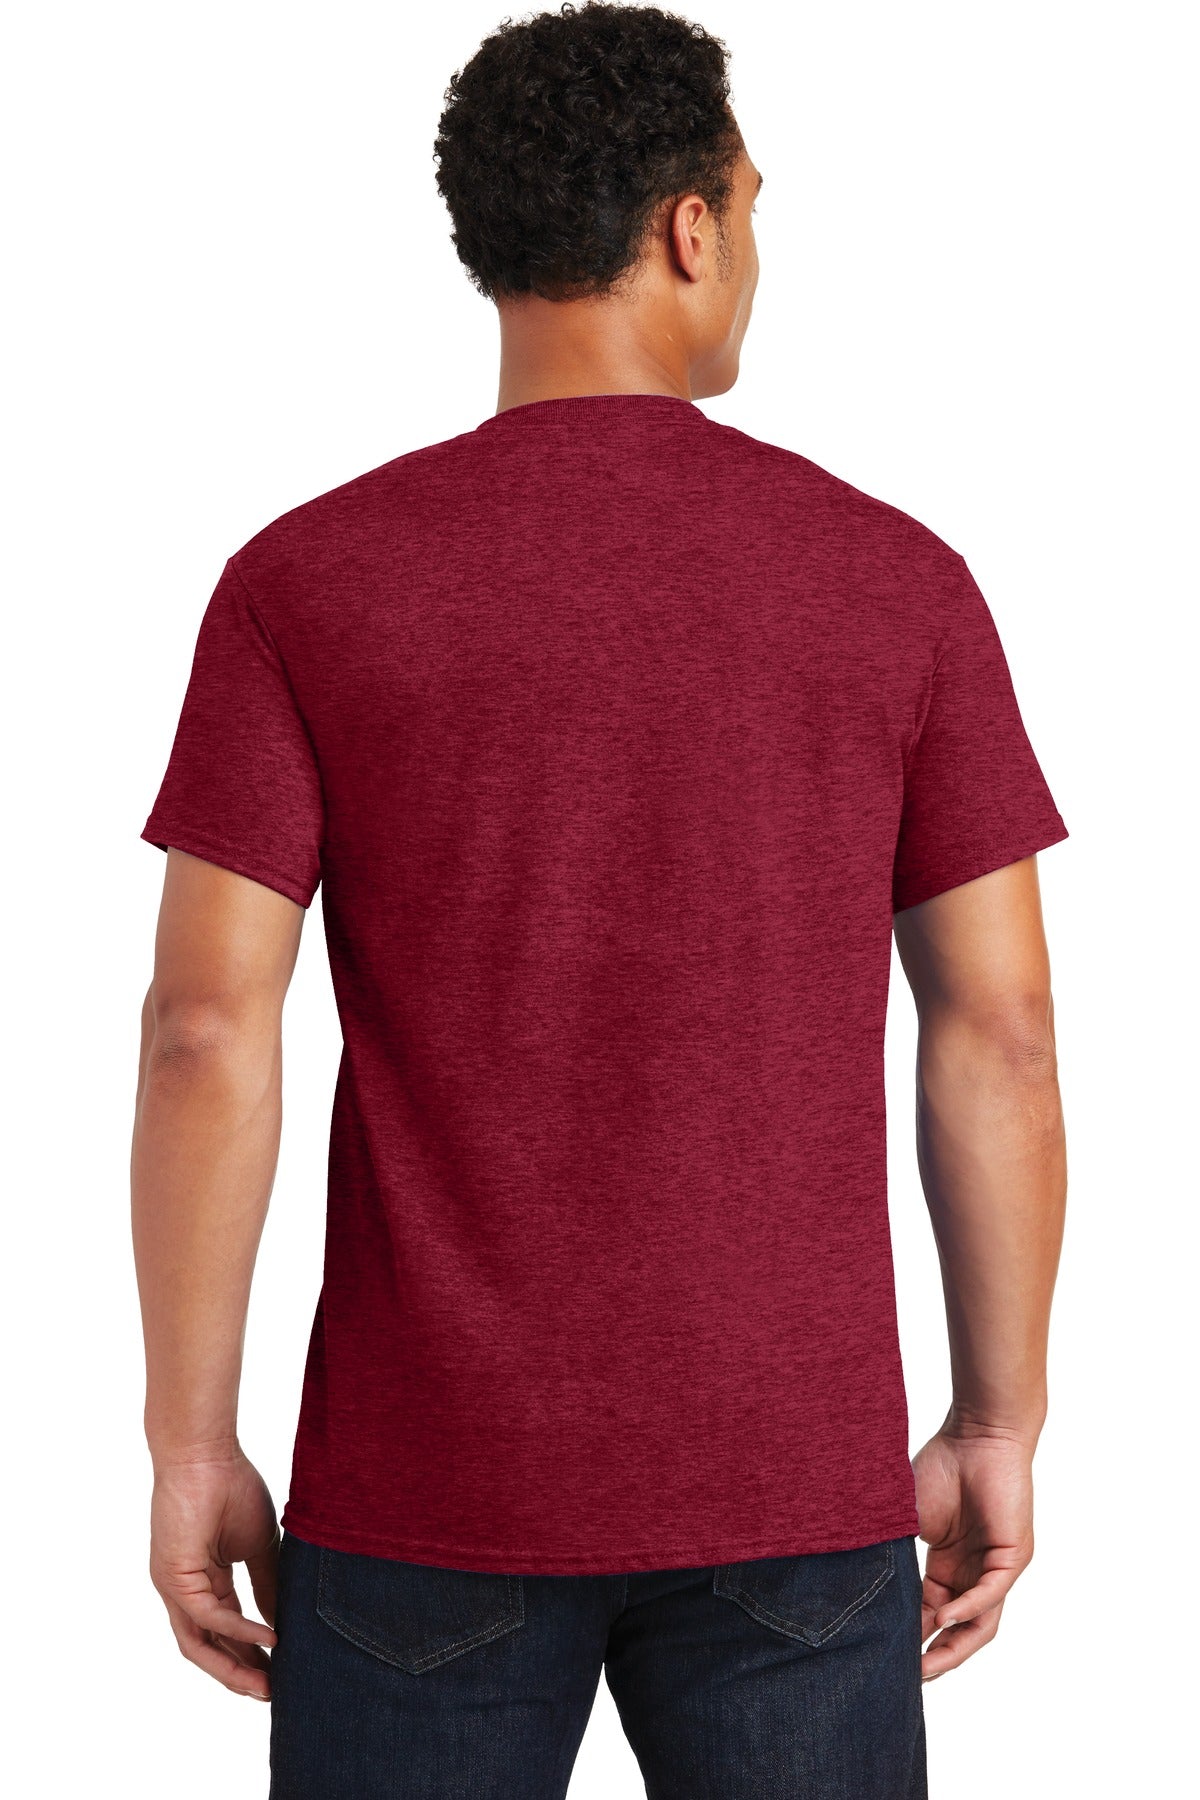 Gildan - Ultra Cotton 100% US Cotton T-Shirt. 2000 - Antique Cherry Red